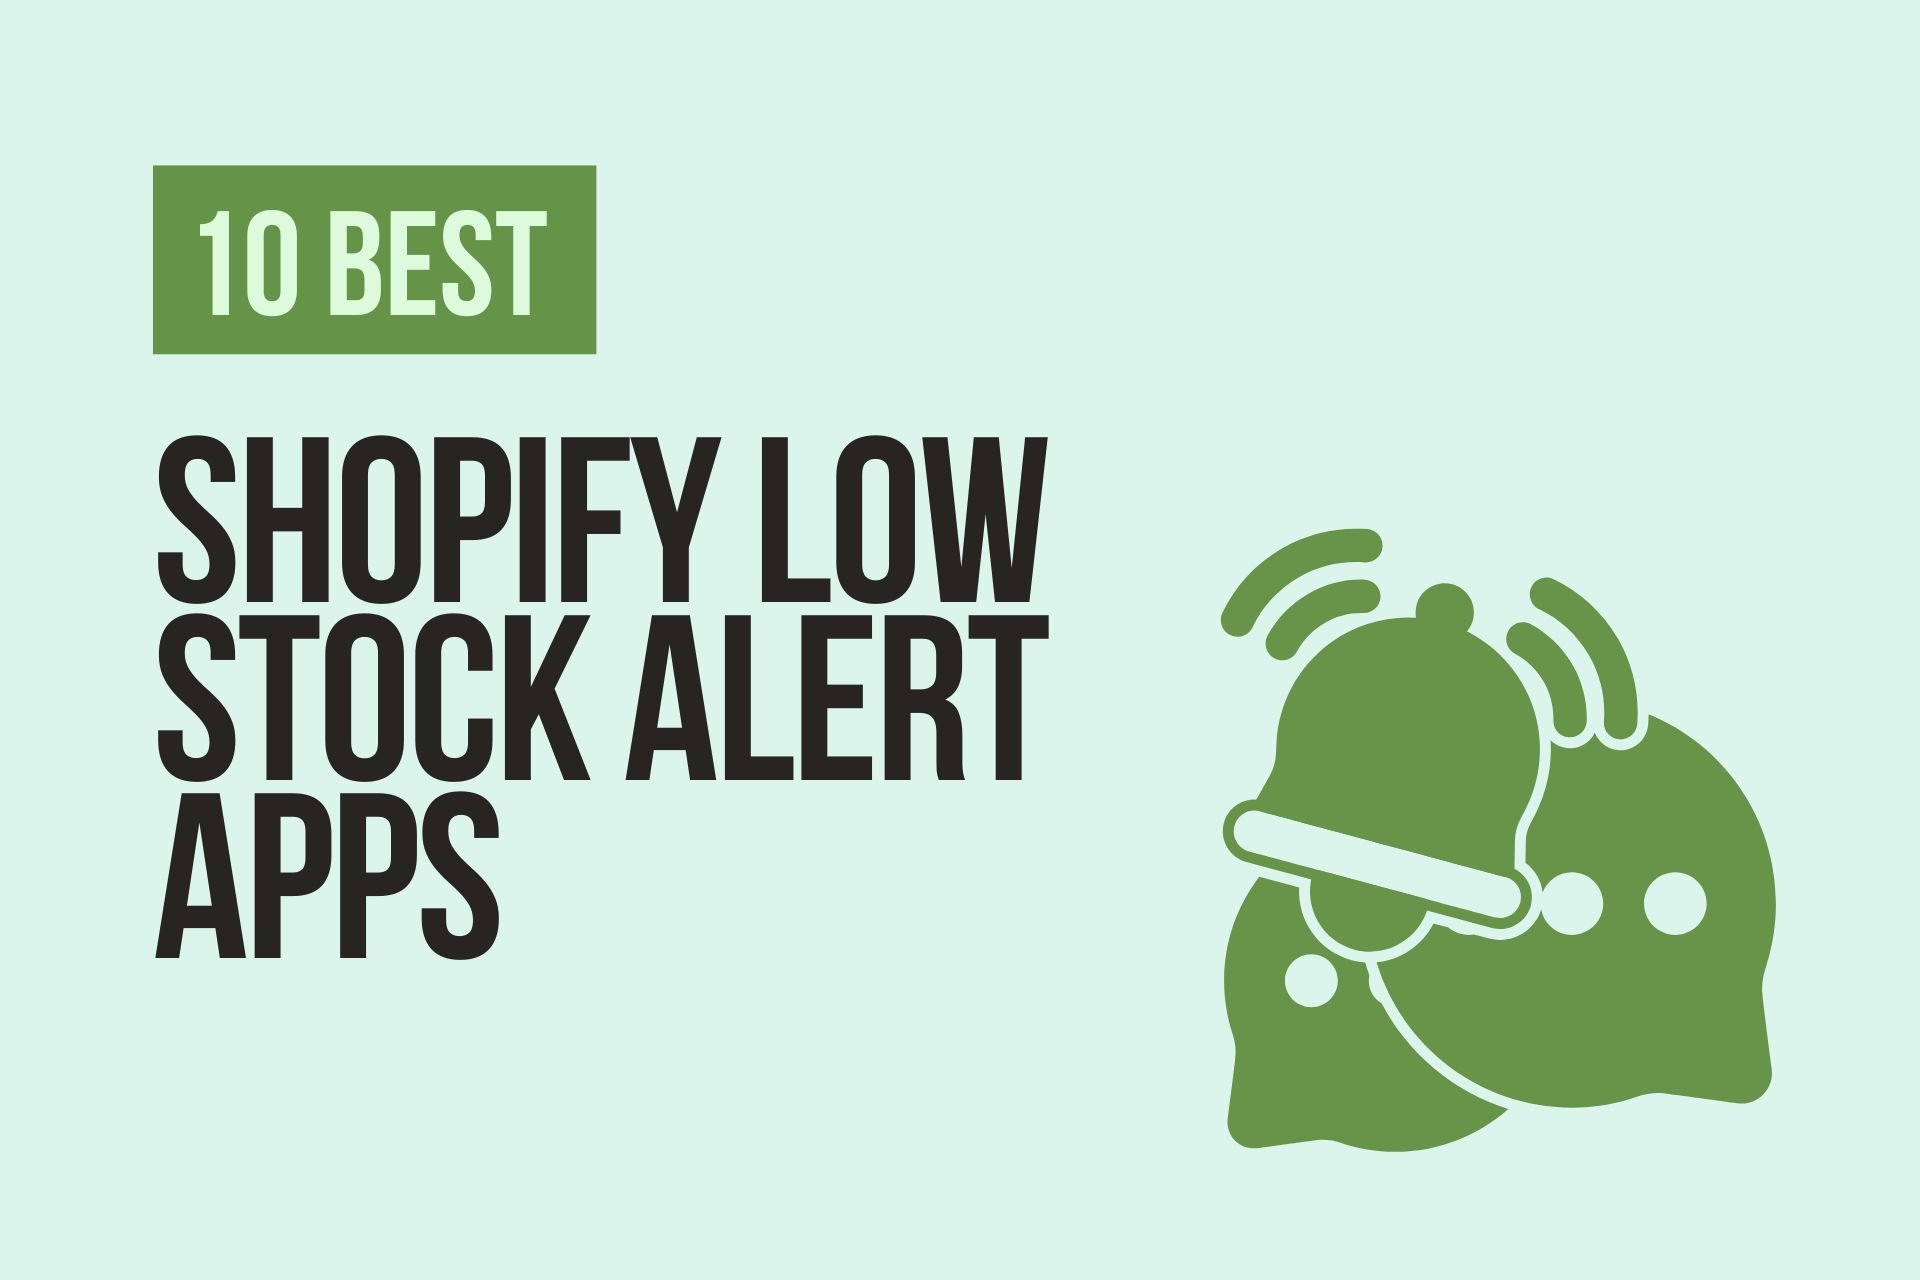 shopify low stock alert apps